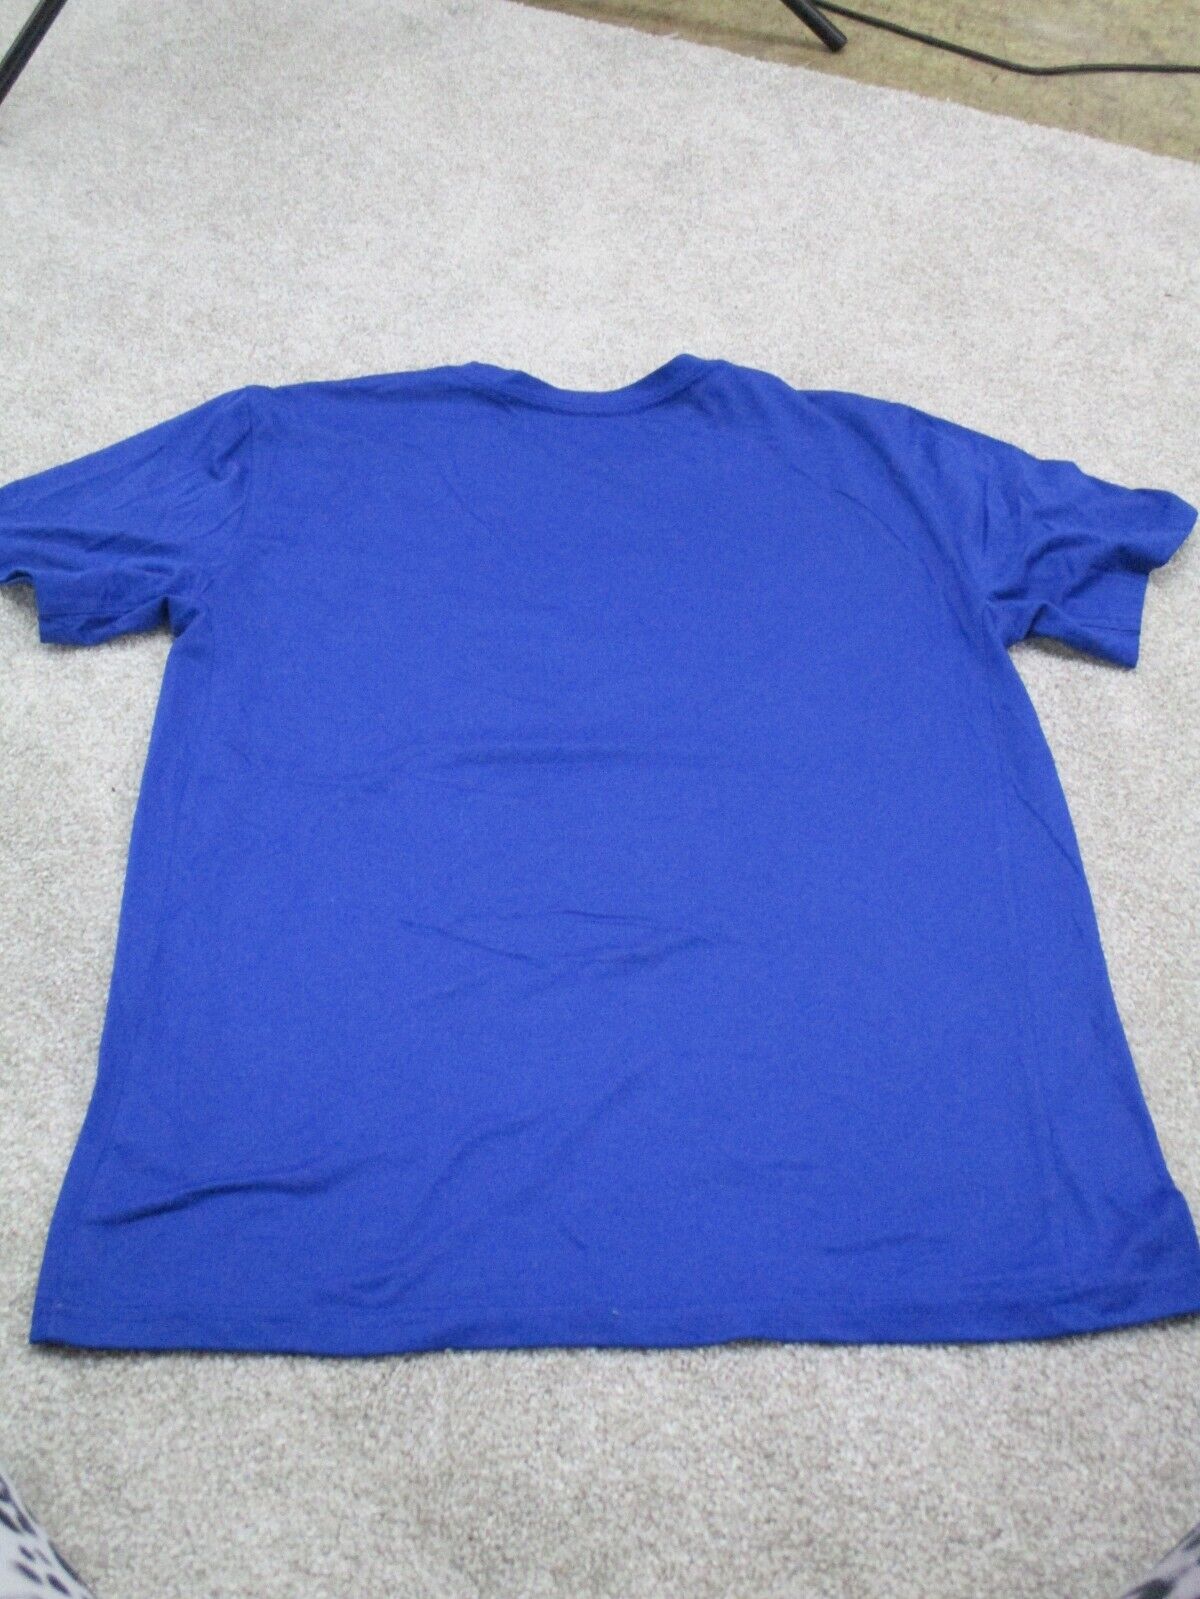 Nike Dri Fit Sports T-Shirt Men s Medium Blue White We Run This Graphic Shirt